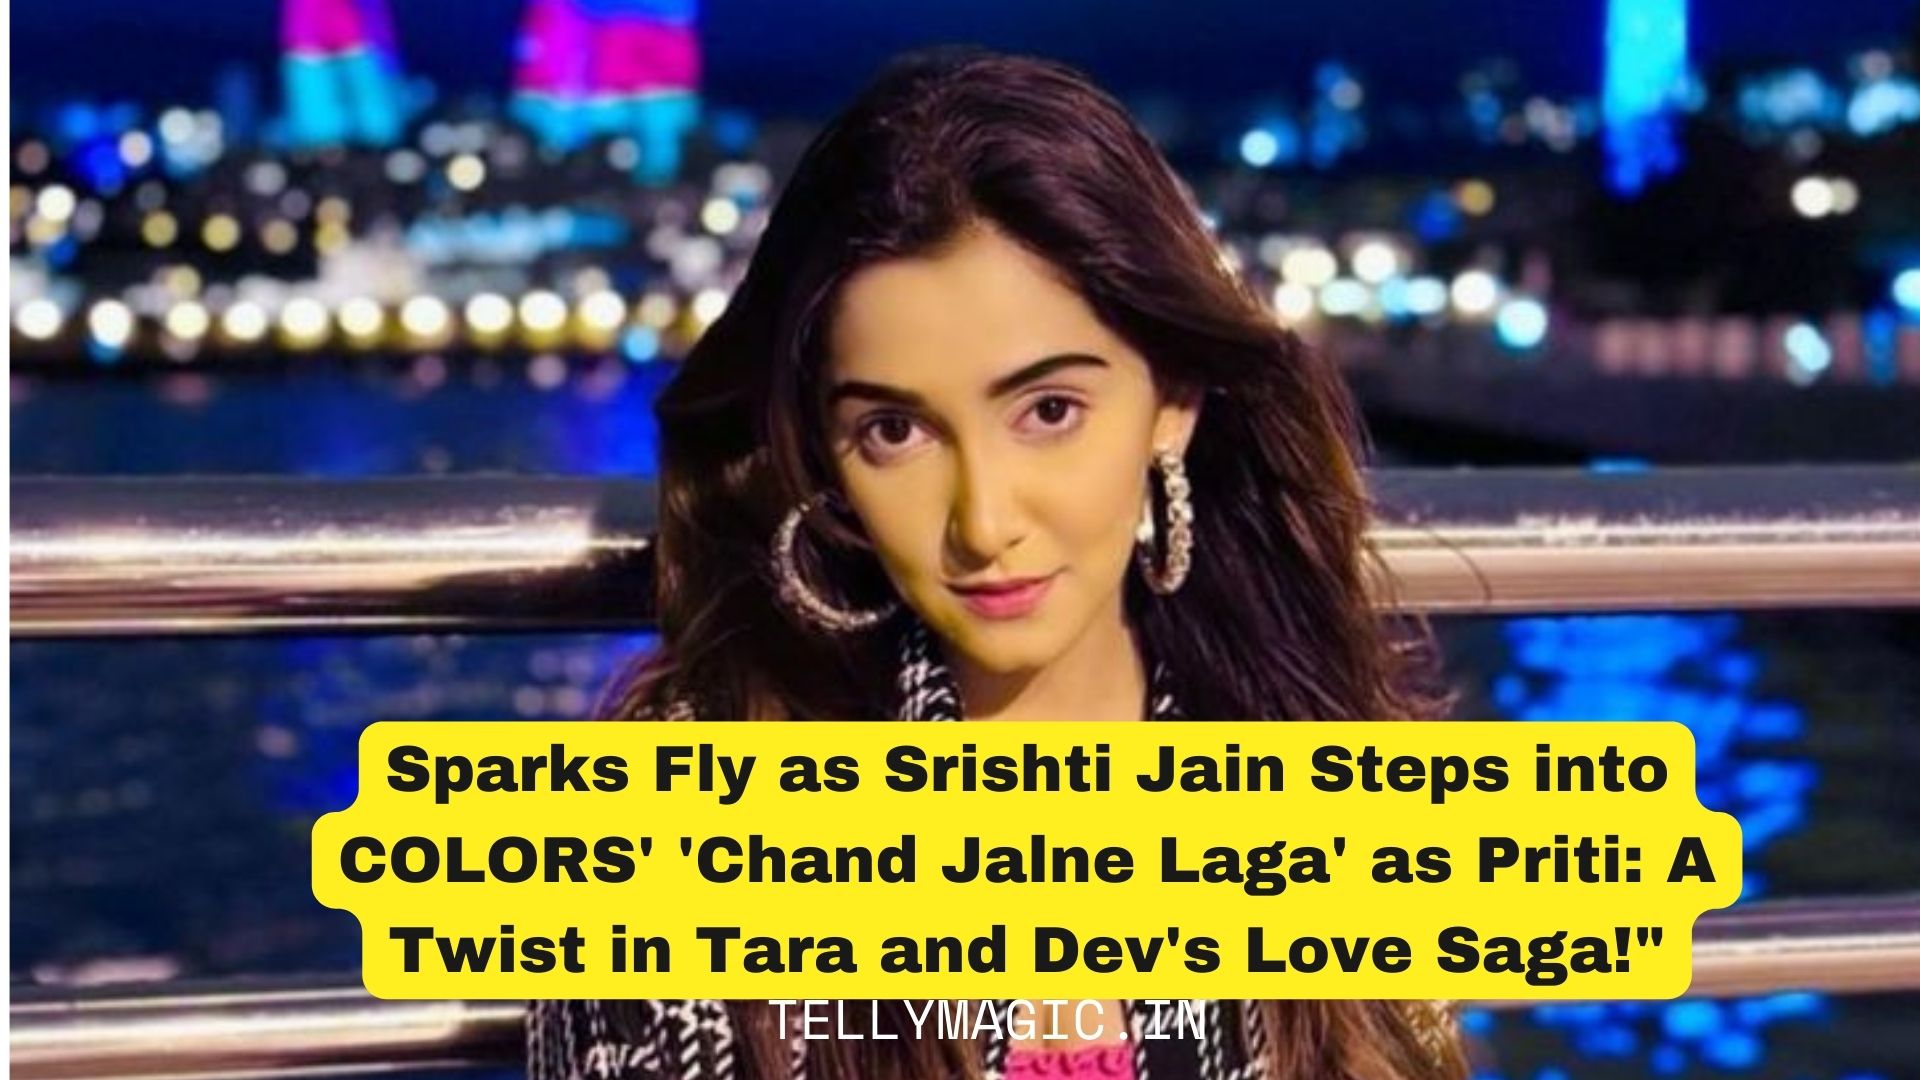 Sparks Fly as Srishti Jain Steps into COLORS’ ‘Chand Jalne Laga’ as Priti: A Twist in Tara and Dev’s Love Saga